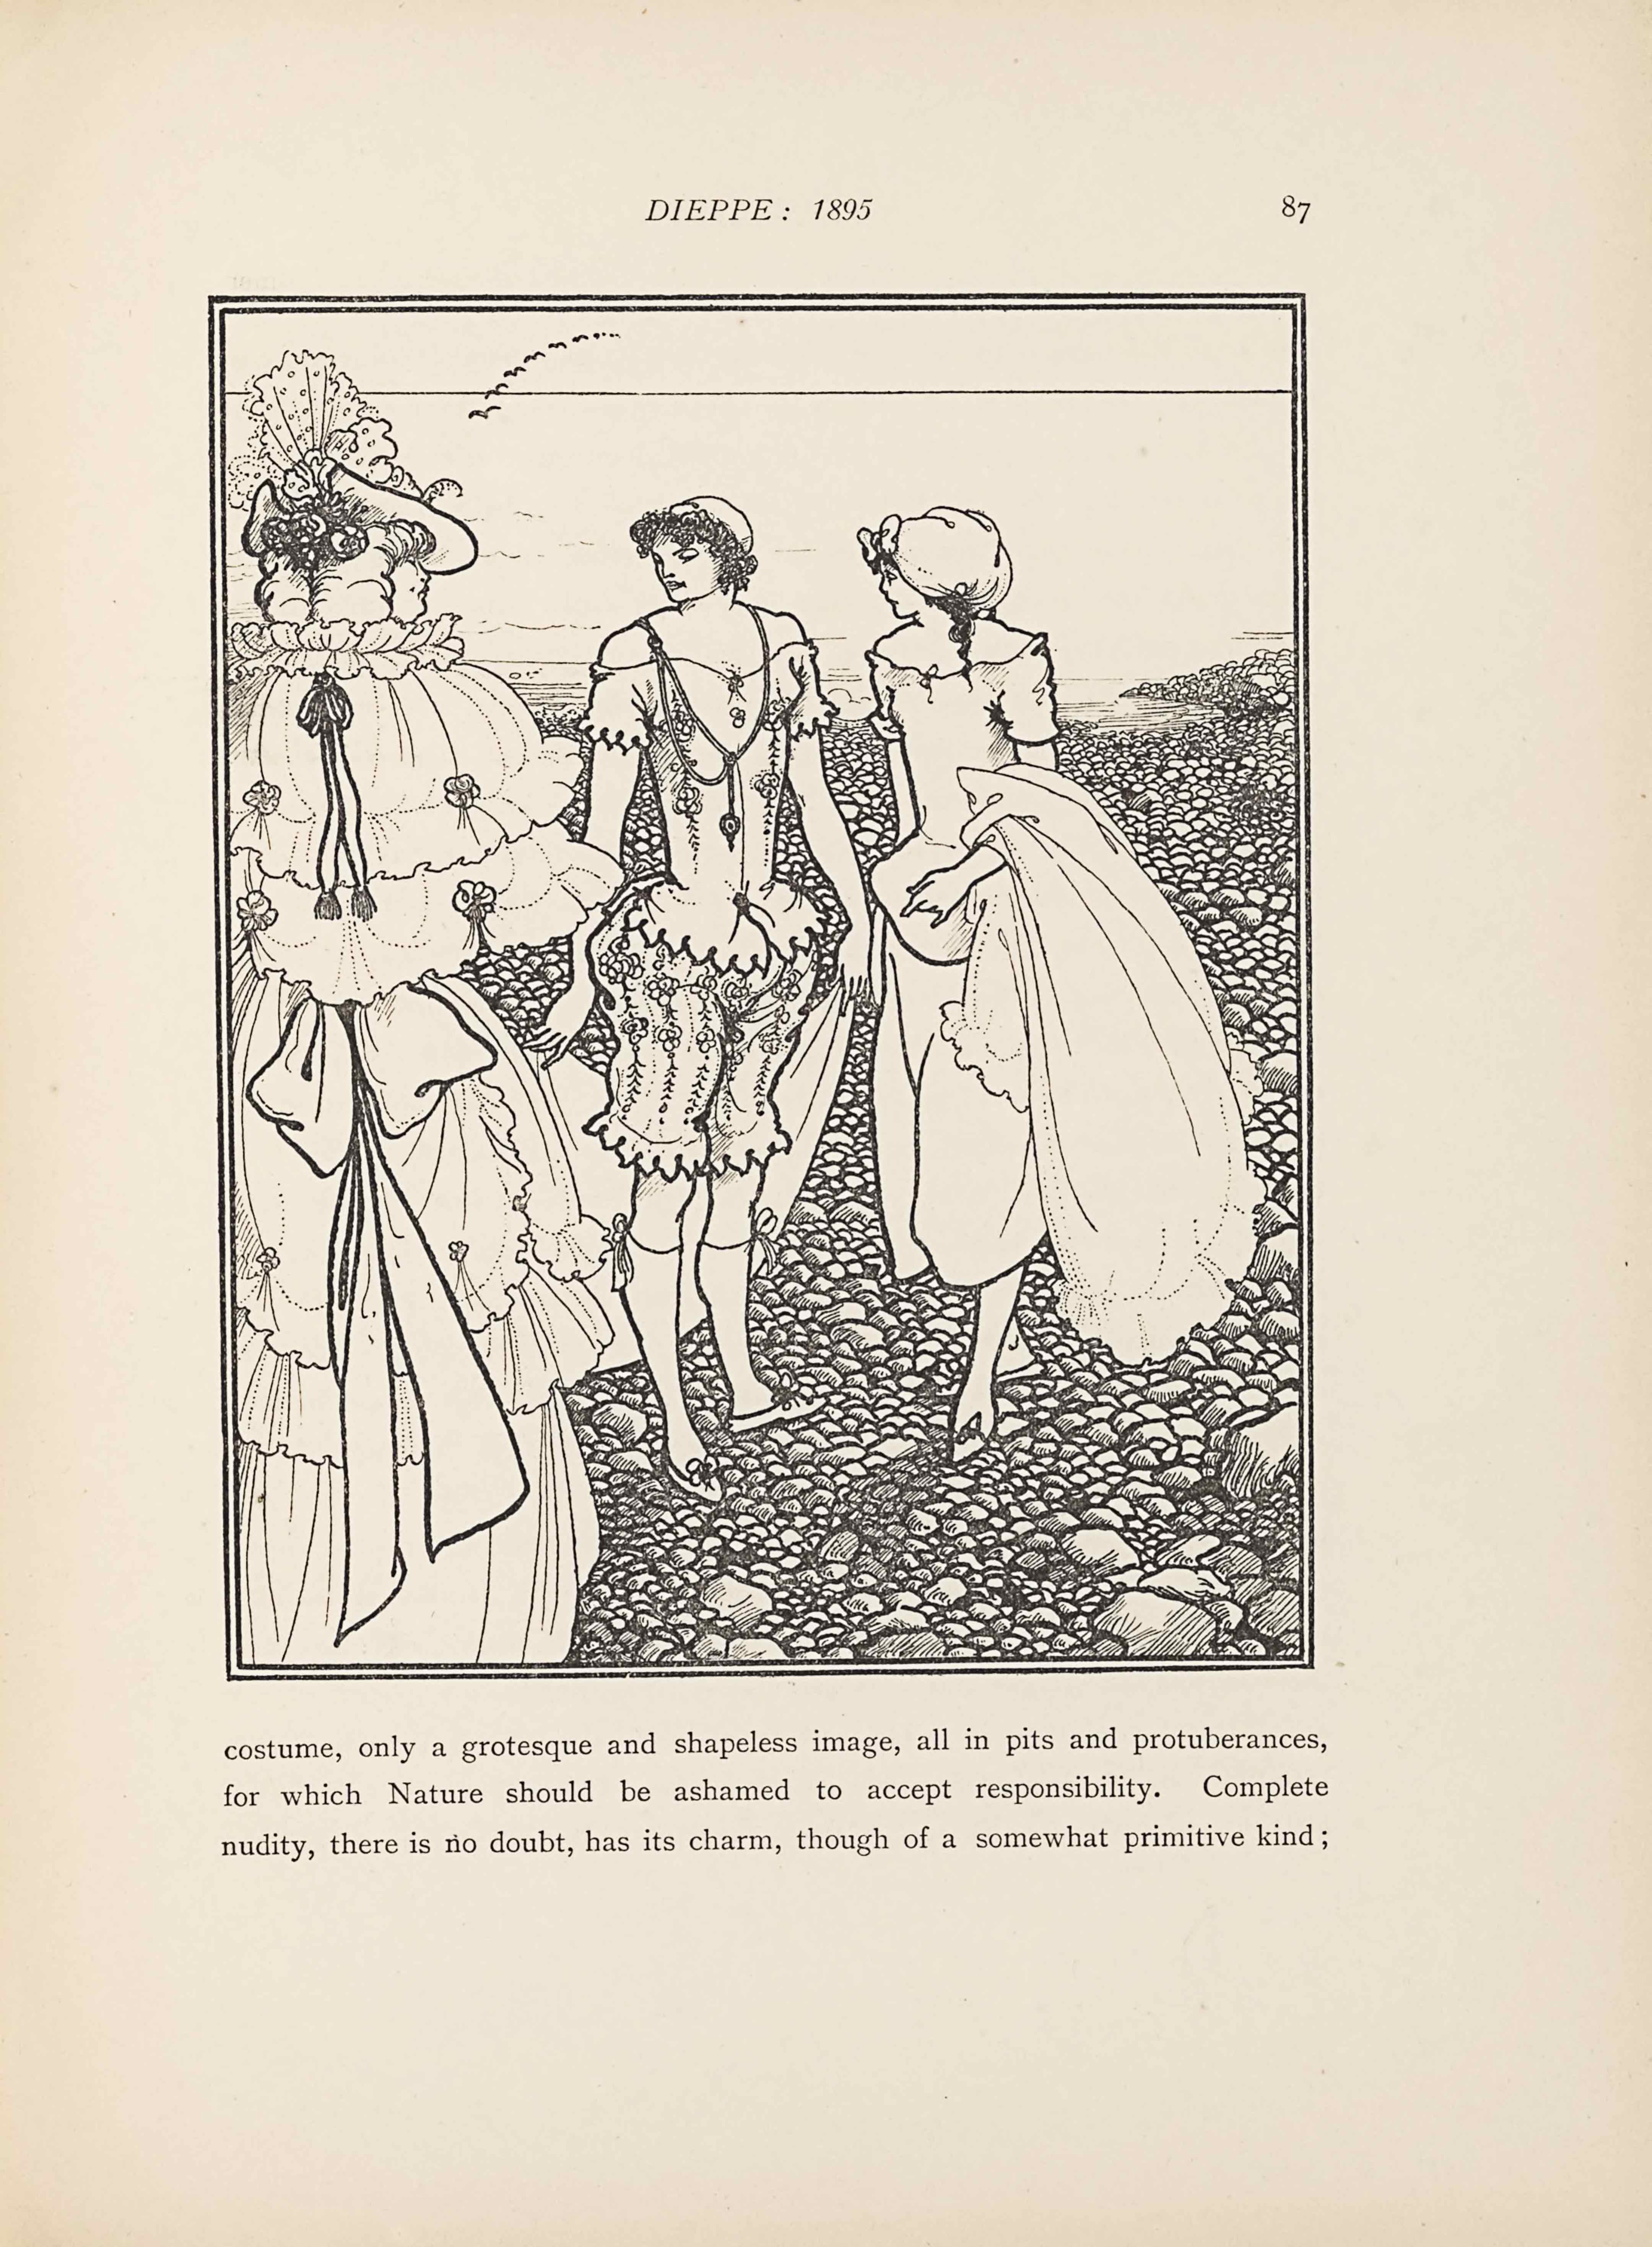 Figure 3. Aubrey Beardsley, "The Bathers," Illustration for "Dieppe," The Savoy, vol. 1 (1896), p. 87